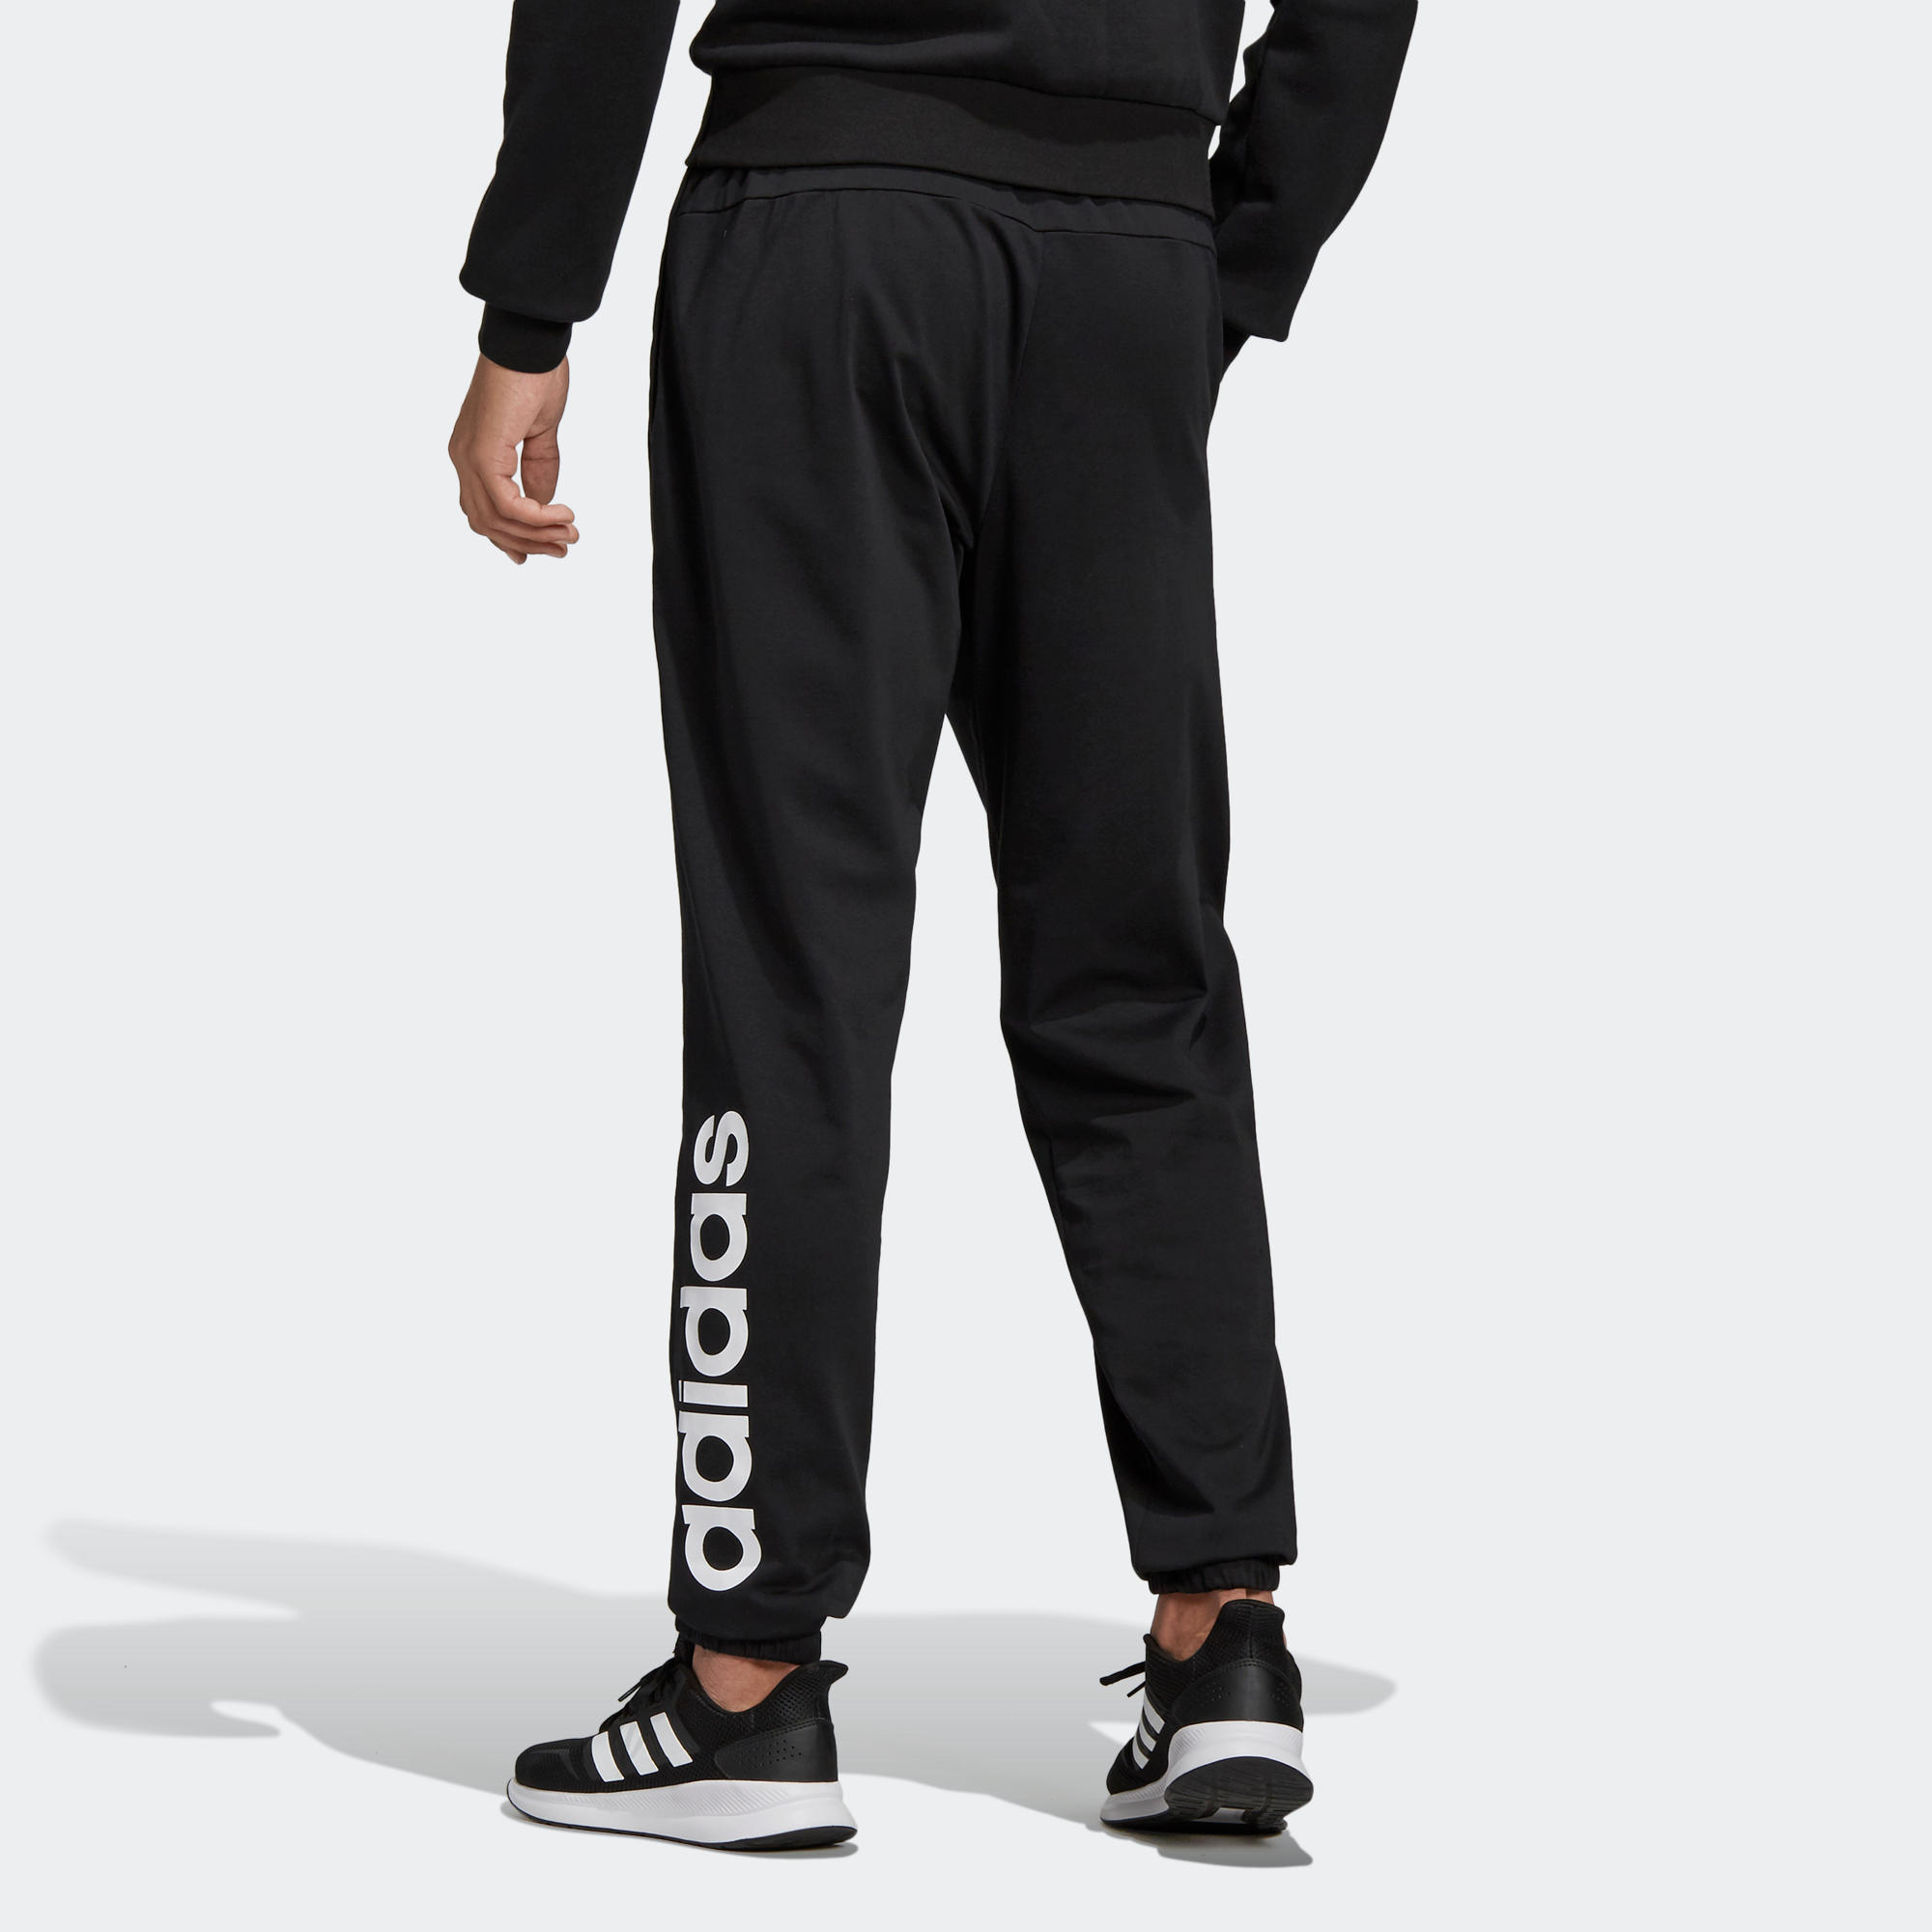 Pantalón Adidas chándal negro hombre Adidas | Decathlon